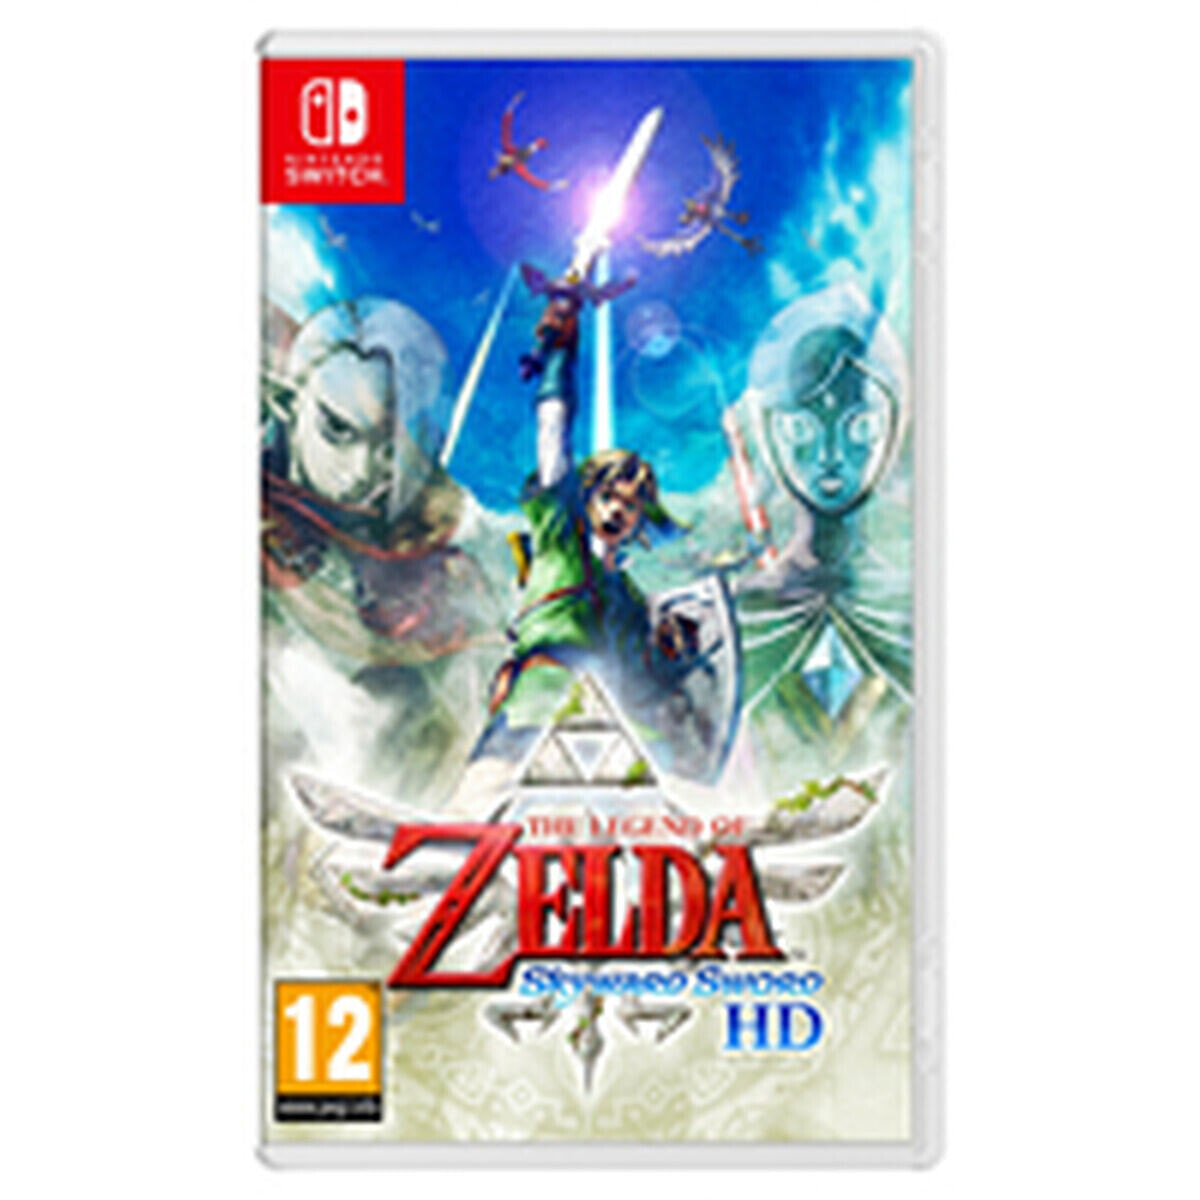 Nintendo The Legend of Zelda: Skyward Sword HD Стандартная Английский, Испанский Nintendo Switch 45496427849